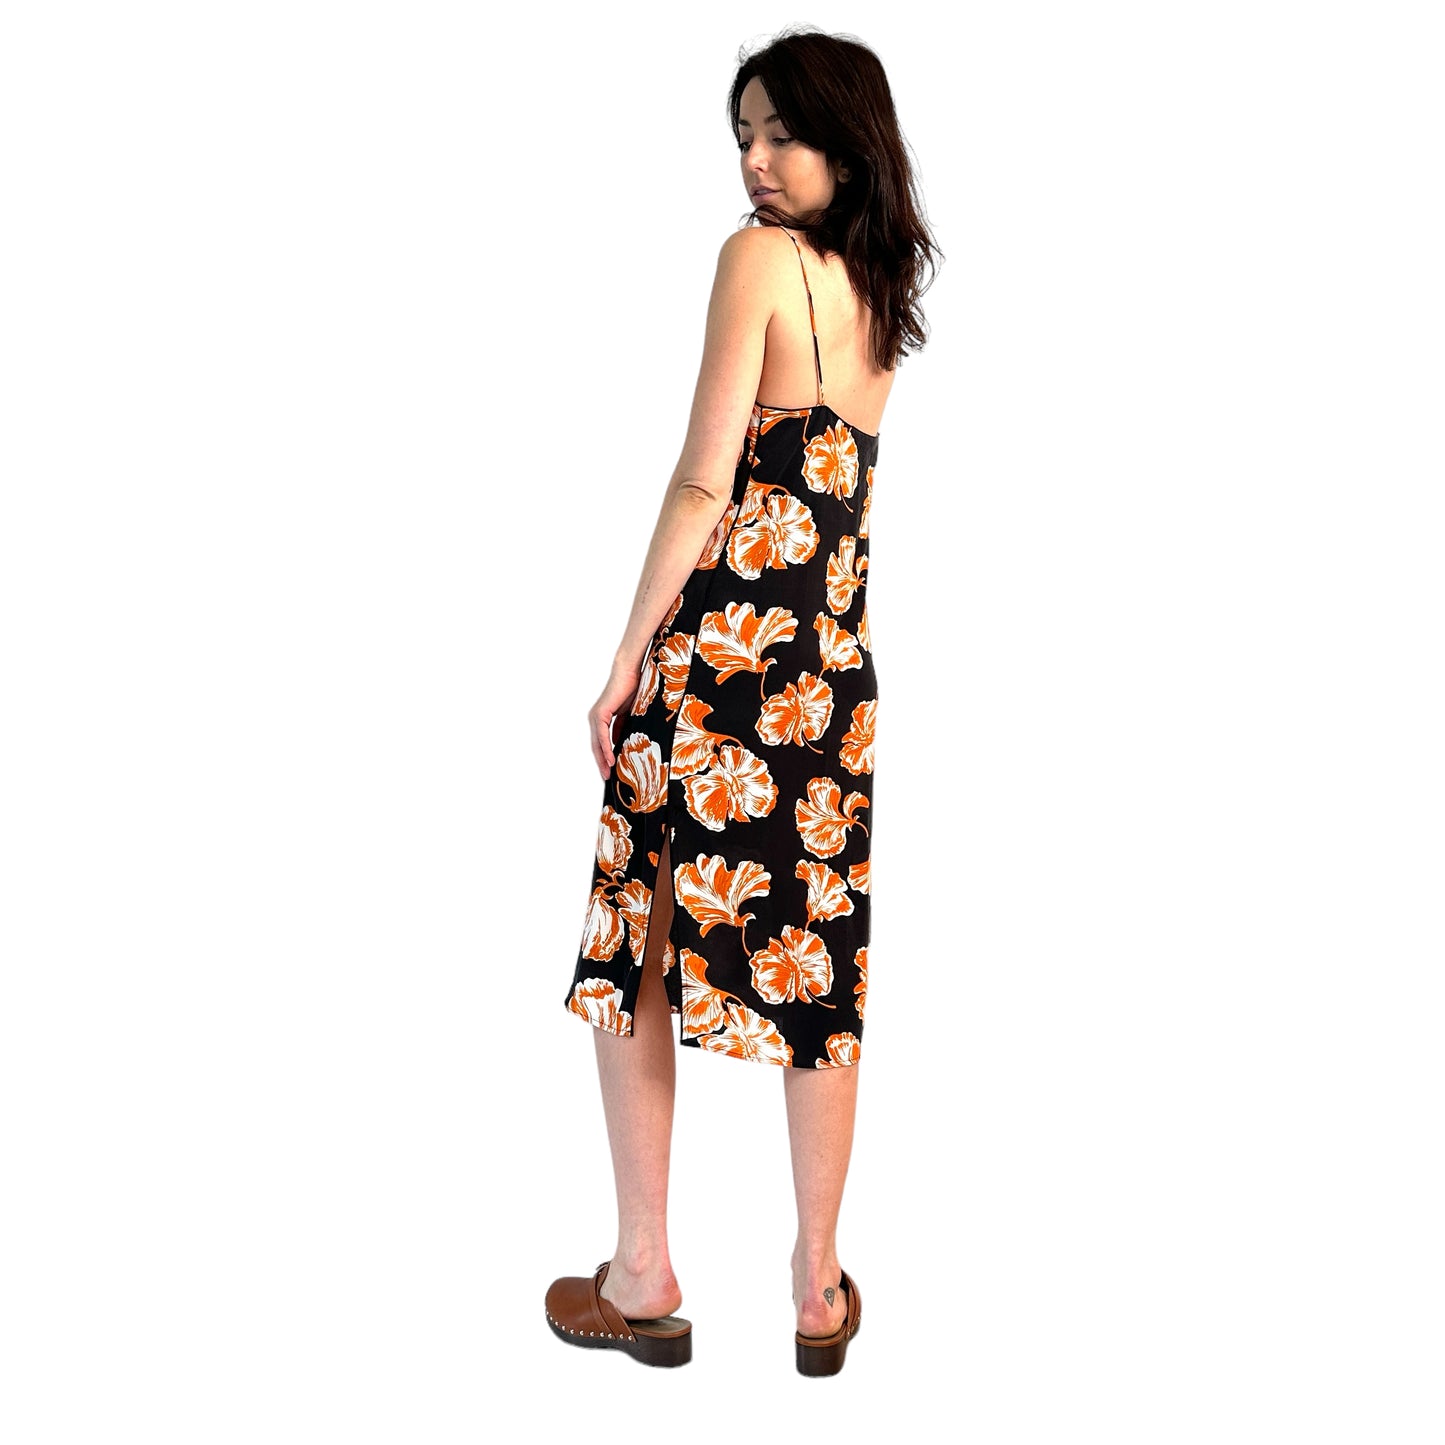 Black & Orange Print Slip-On Dress - S